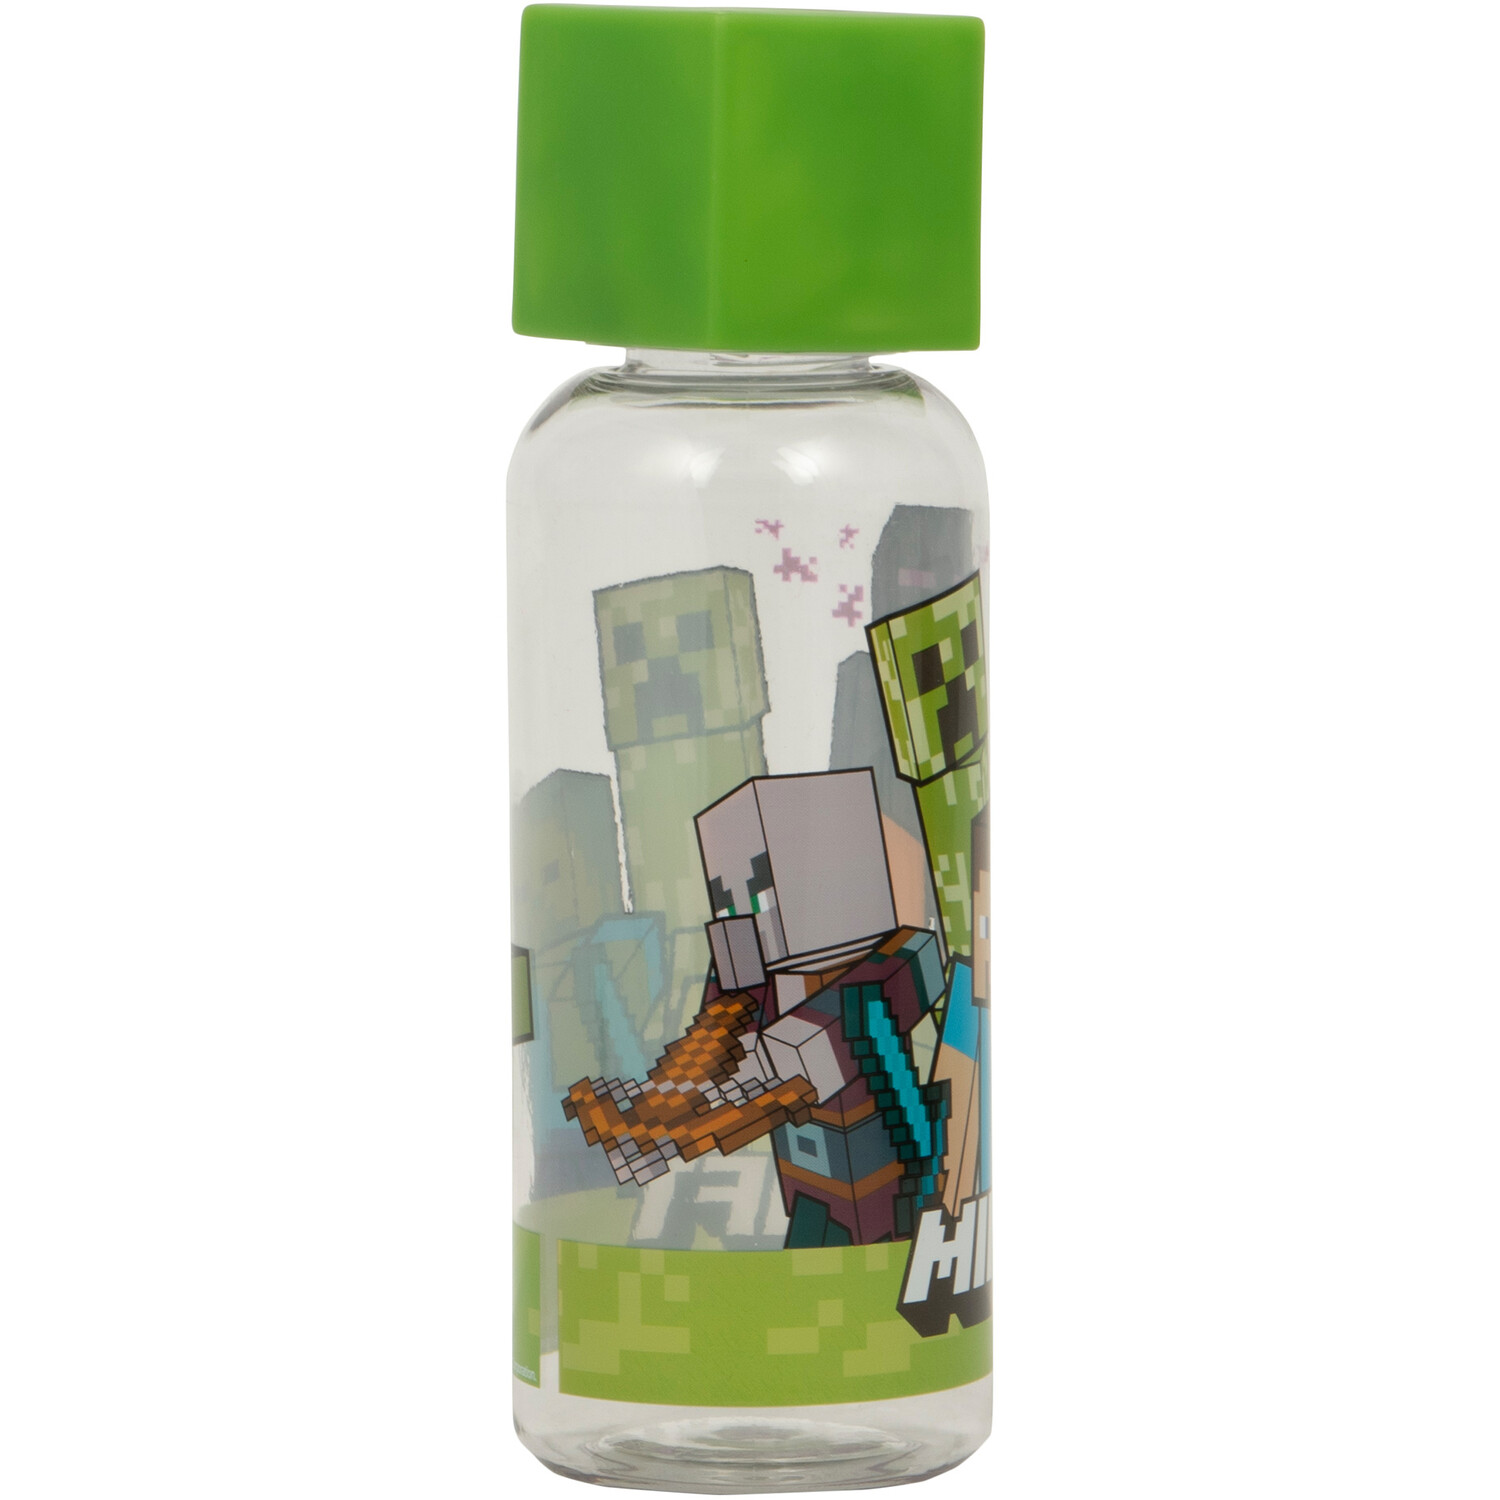 3D Minecraft Licensed Water Bottle - Green Image 2